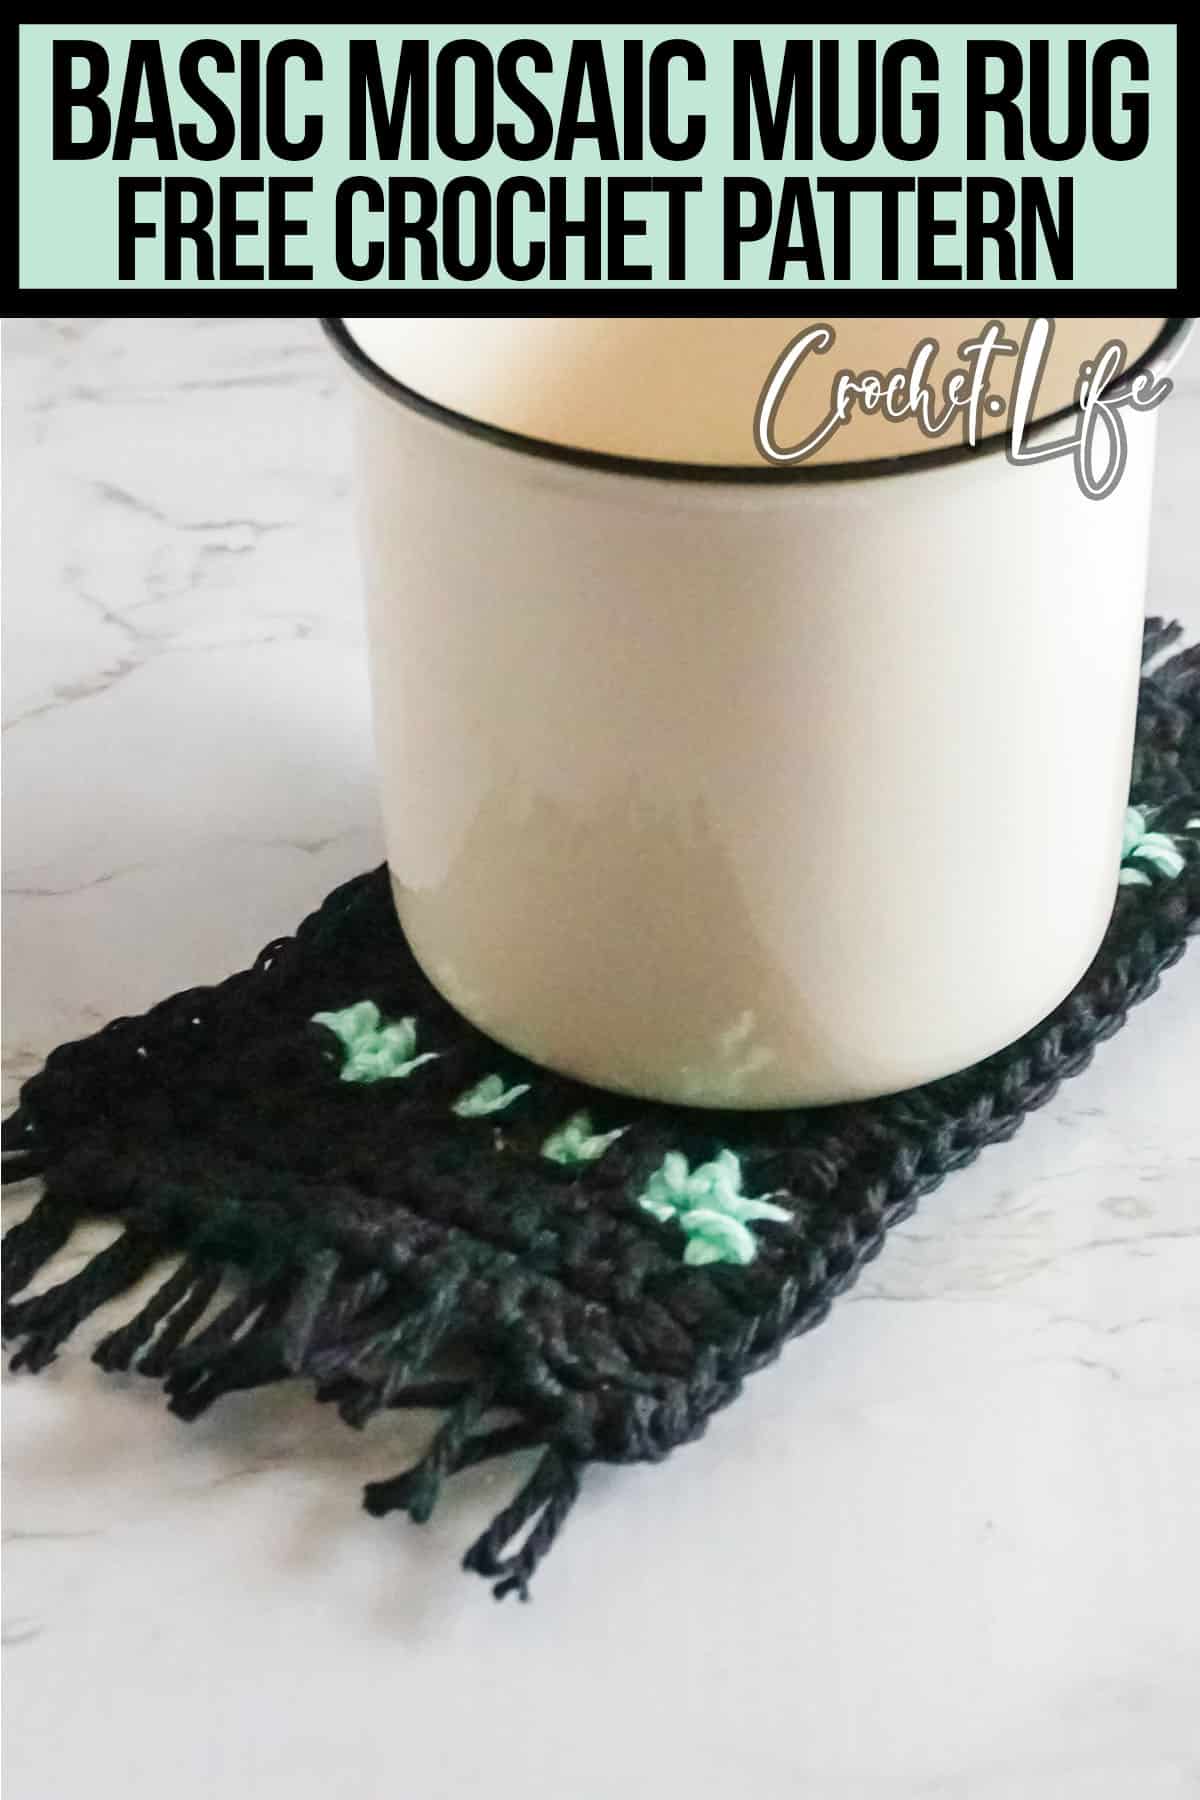 mug rug coaster crochet pattern with text which reads basic mosaic mug rug free crochet pattern